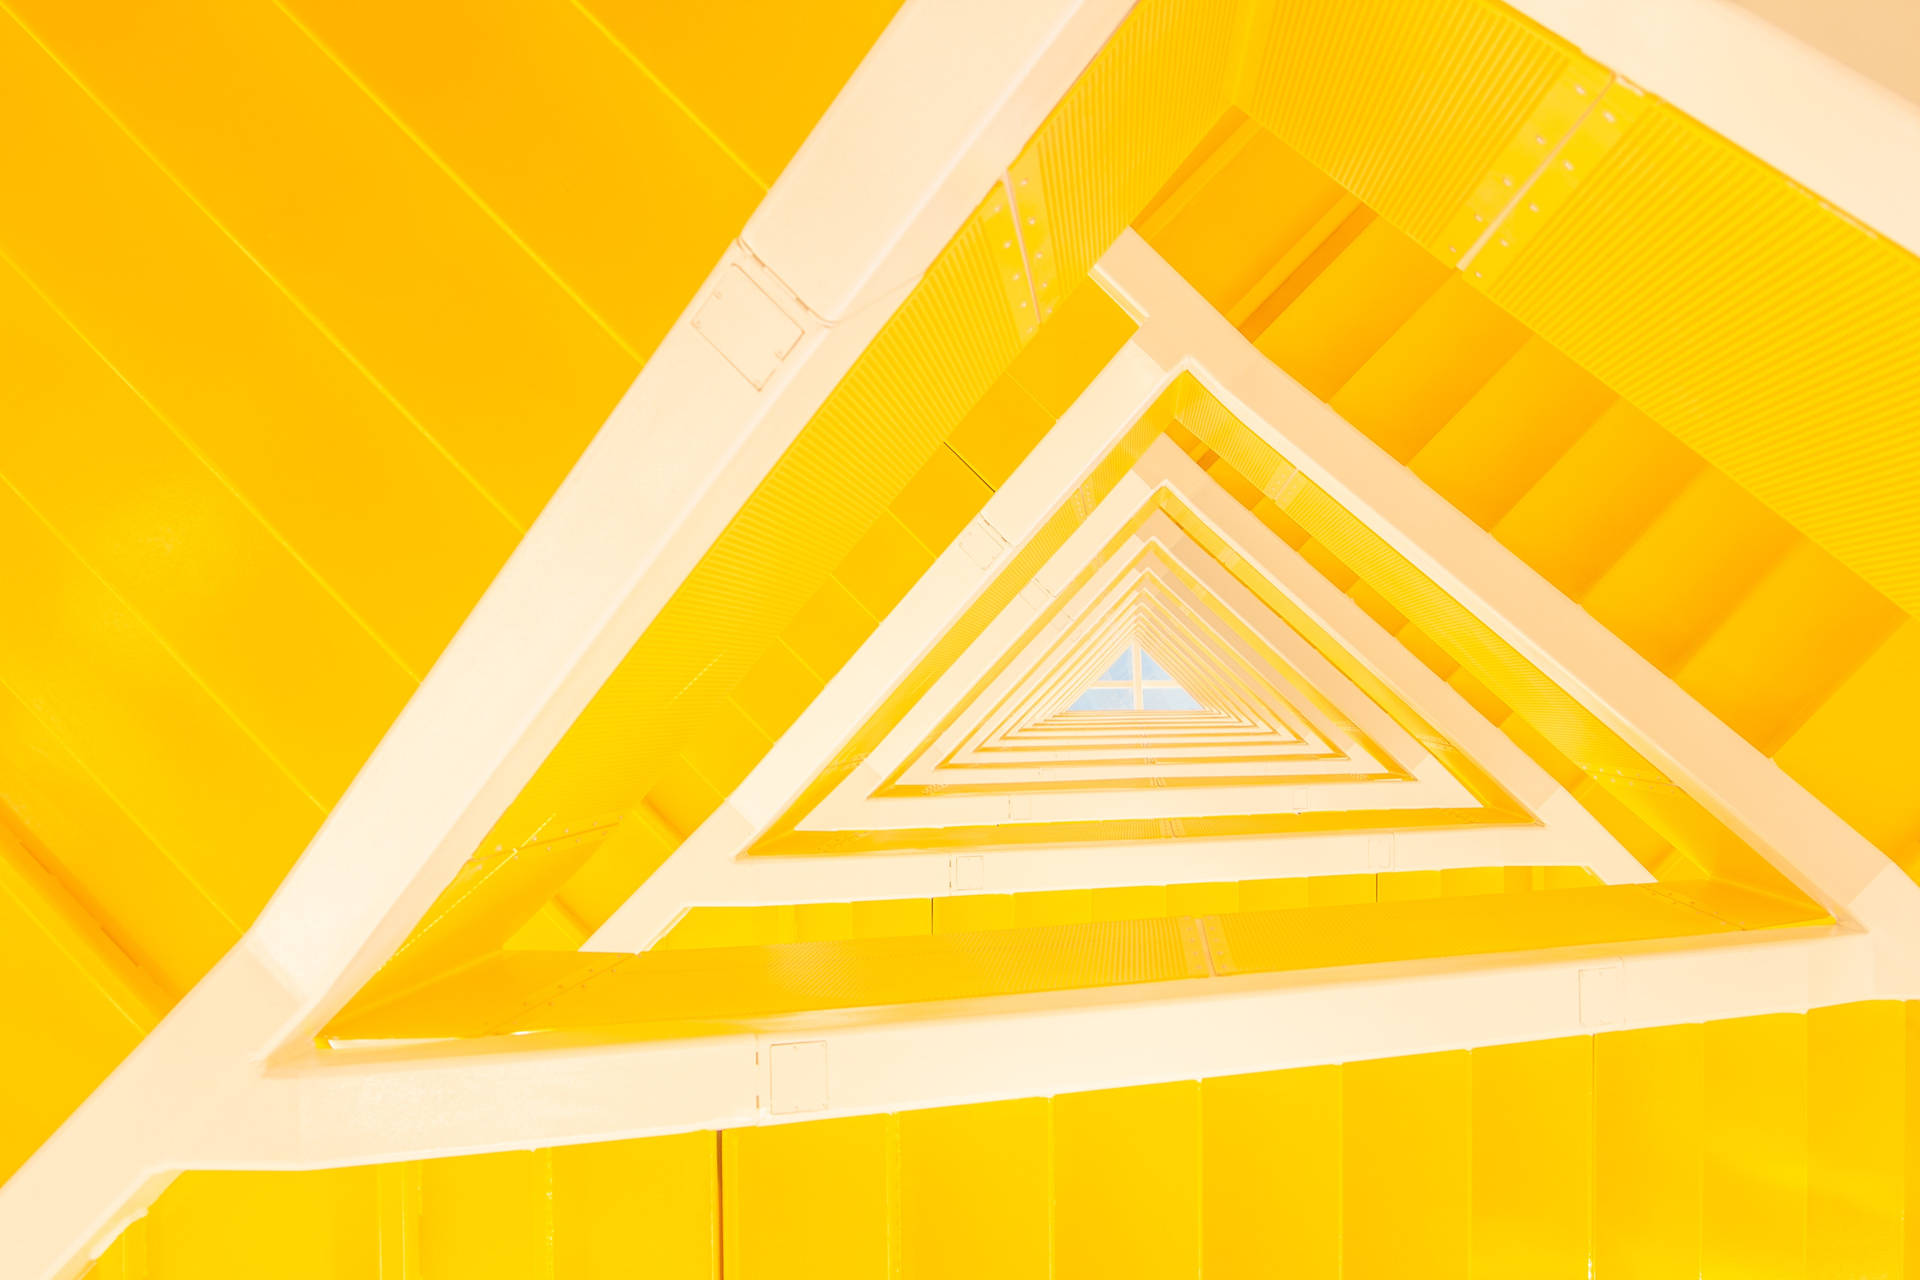 Iphone Home Screen Triangular Yellow Stairs Background